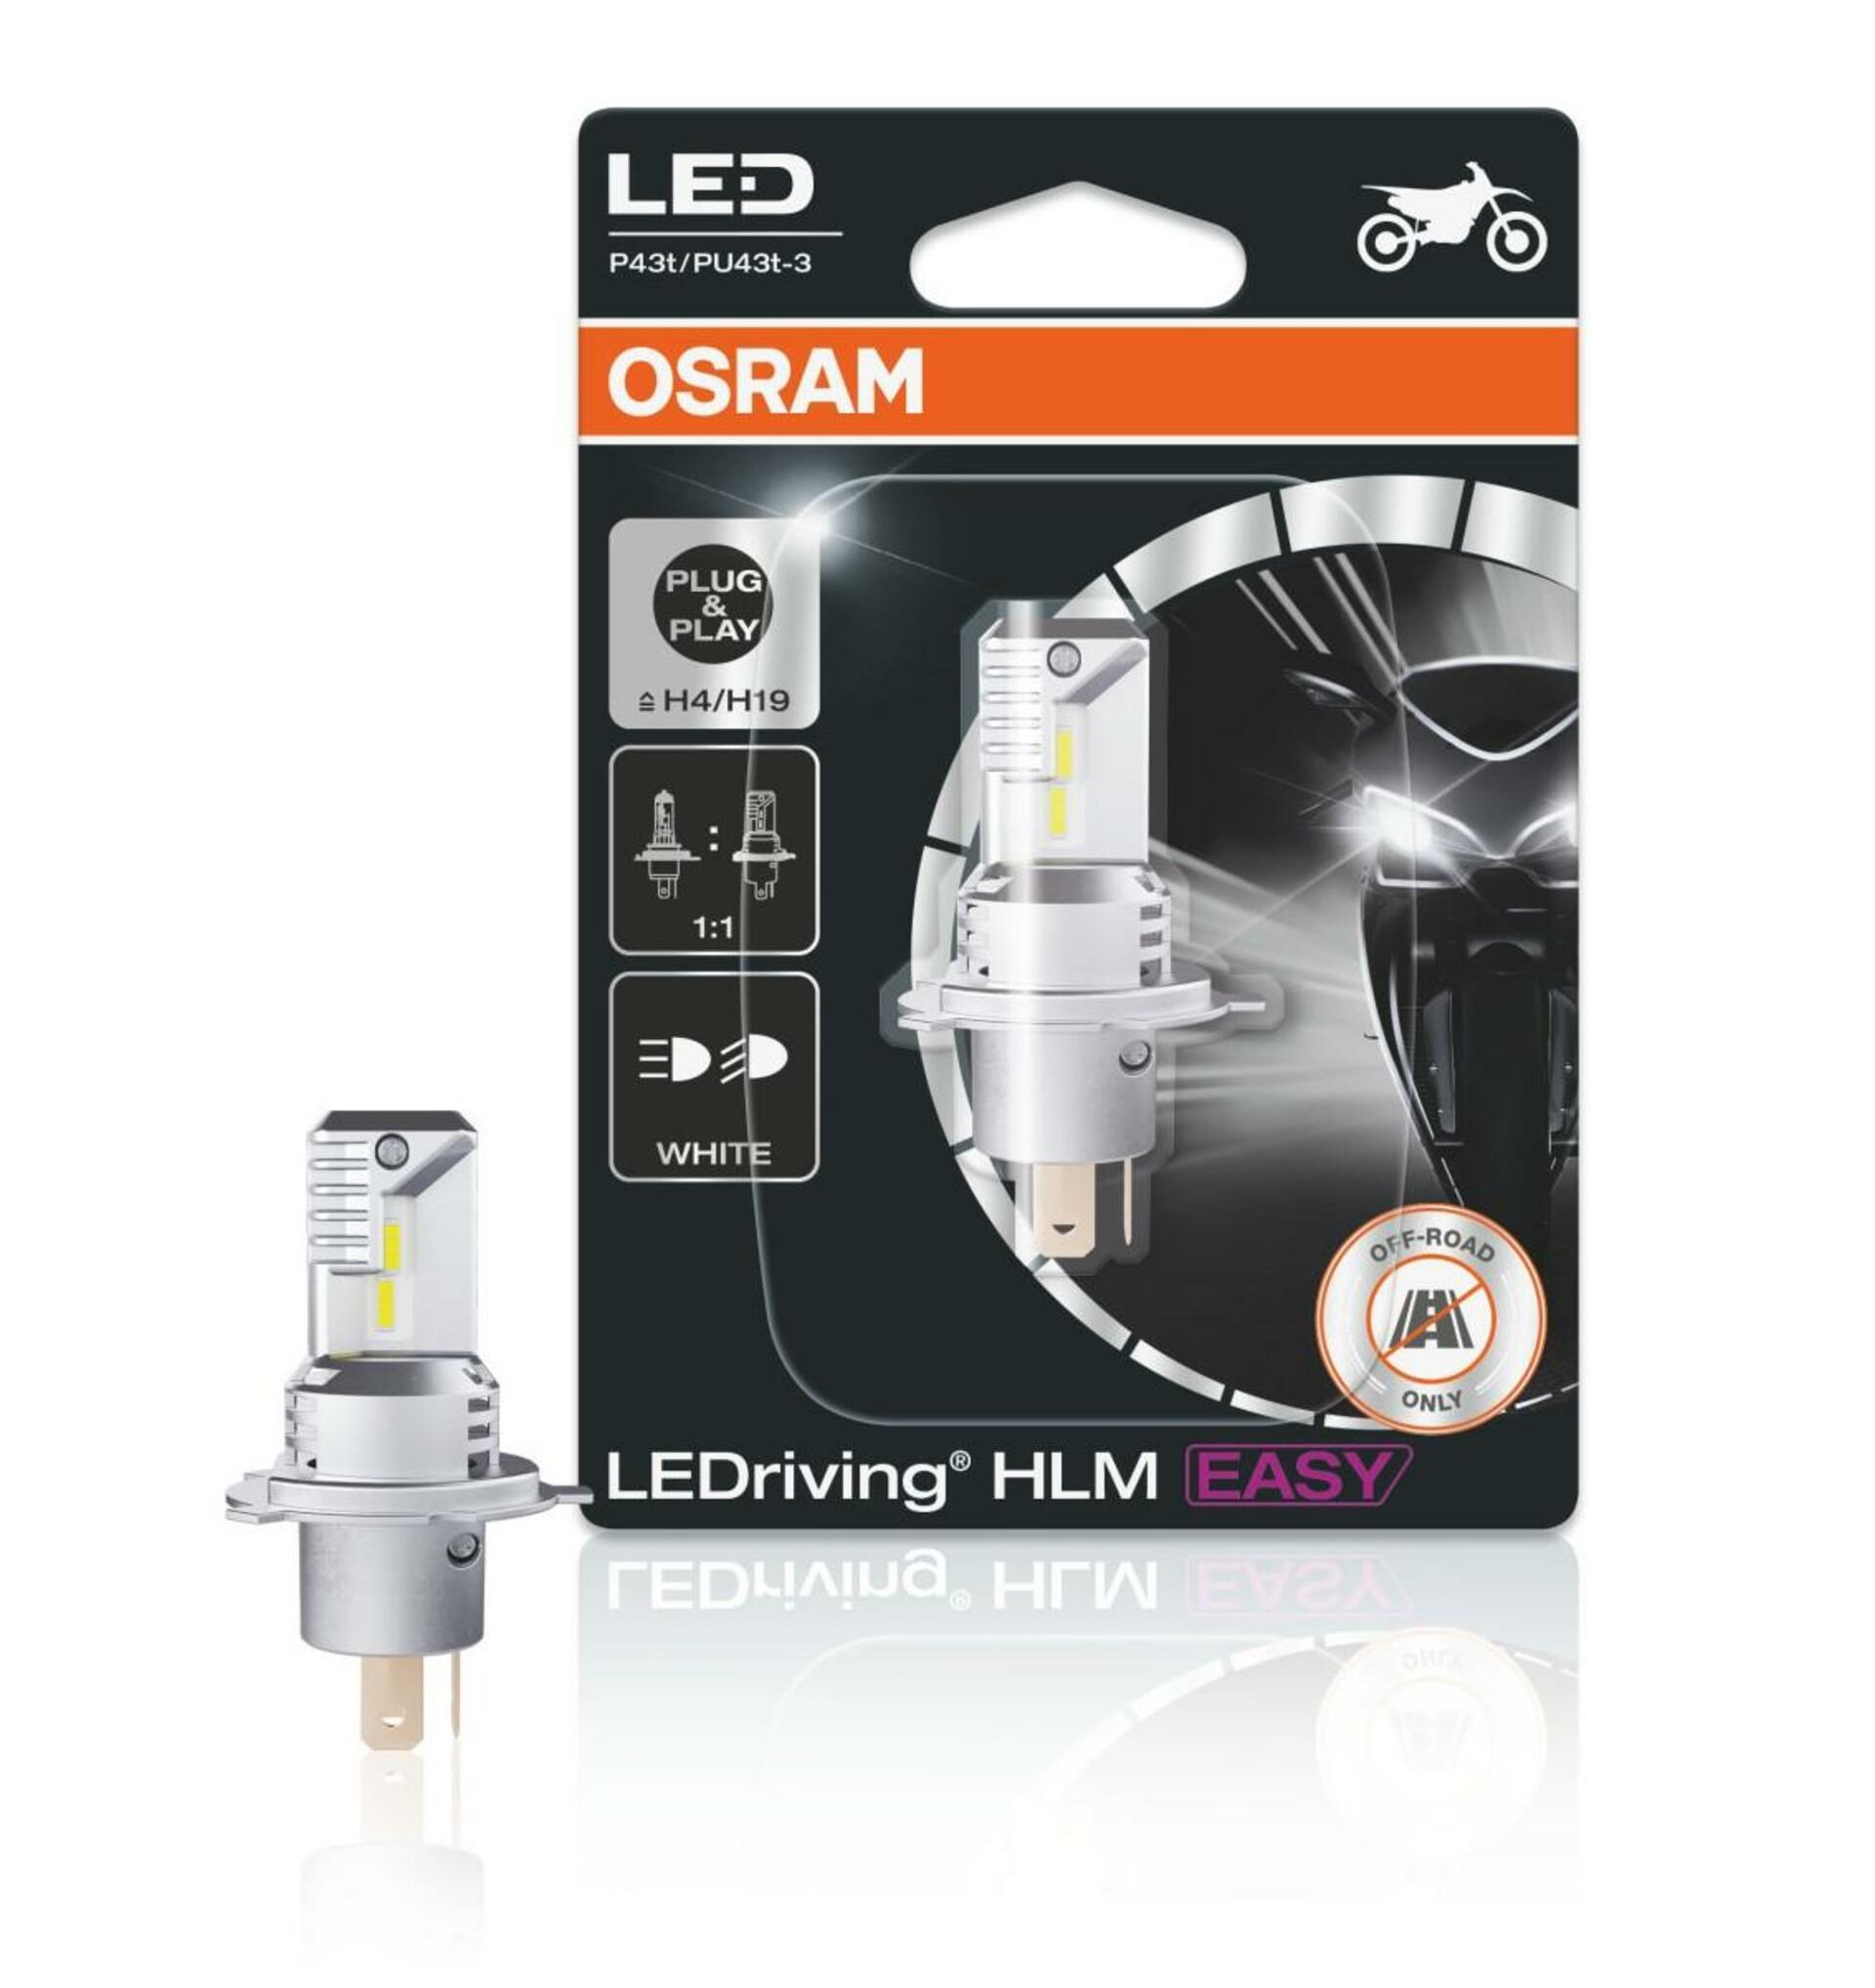 OSRAM LEDriving HLM EASY H4 12V 16.5/16.5W P43t/PU43t-3 6500K White 64193DWESY-01B